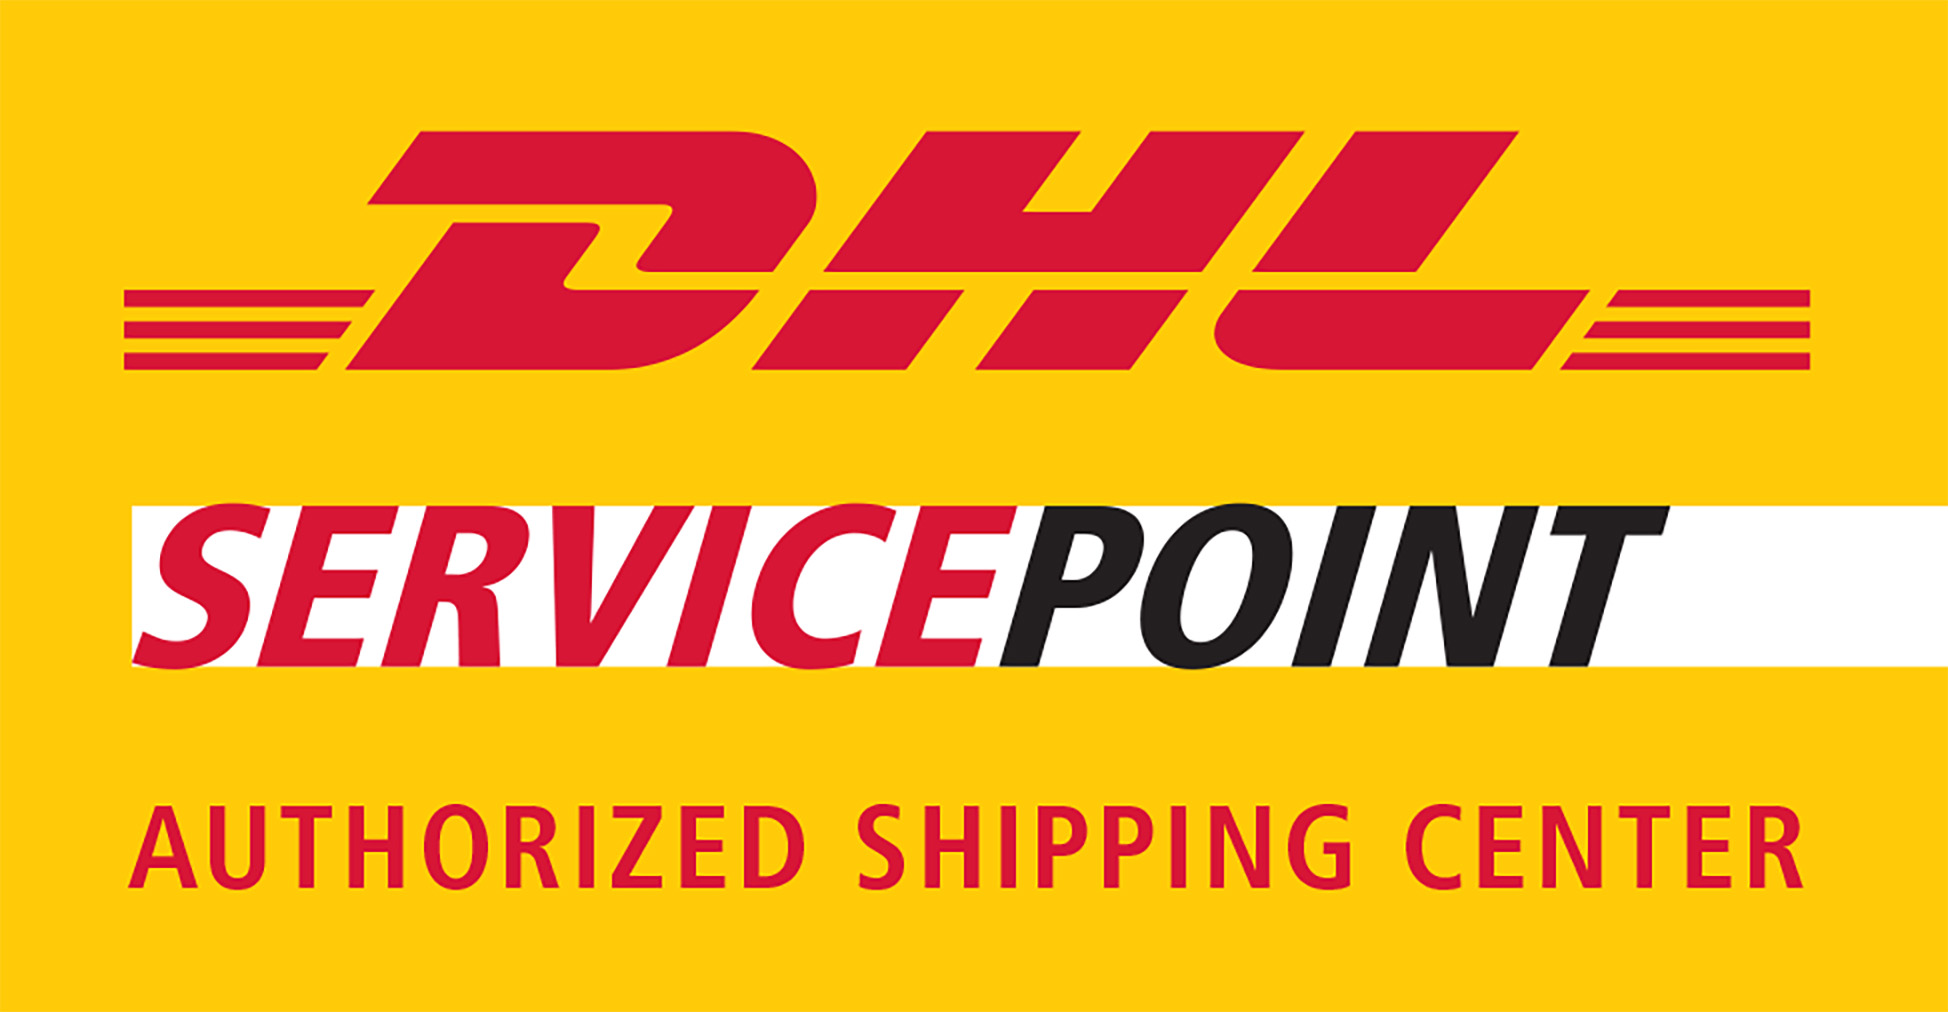 Dhl алматы. DHL. DHL service point. DHL логотип компании. Конкурент DHL логотип.